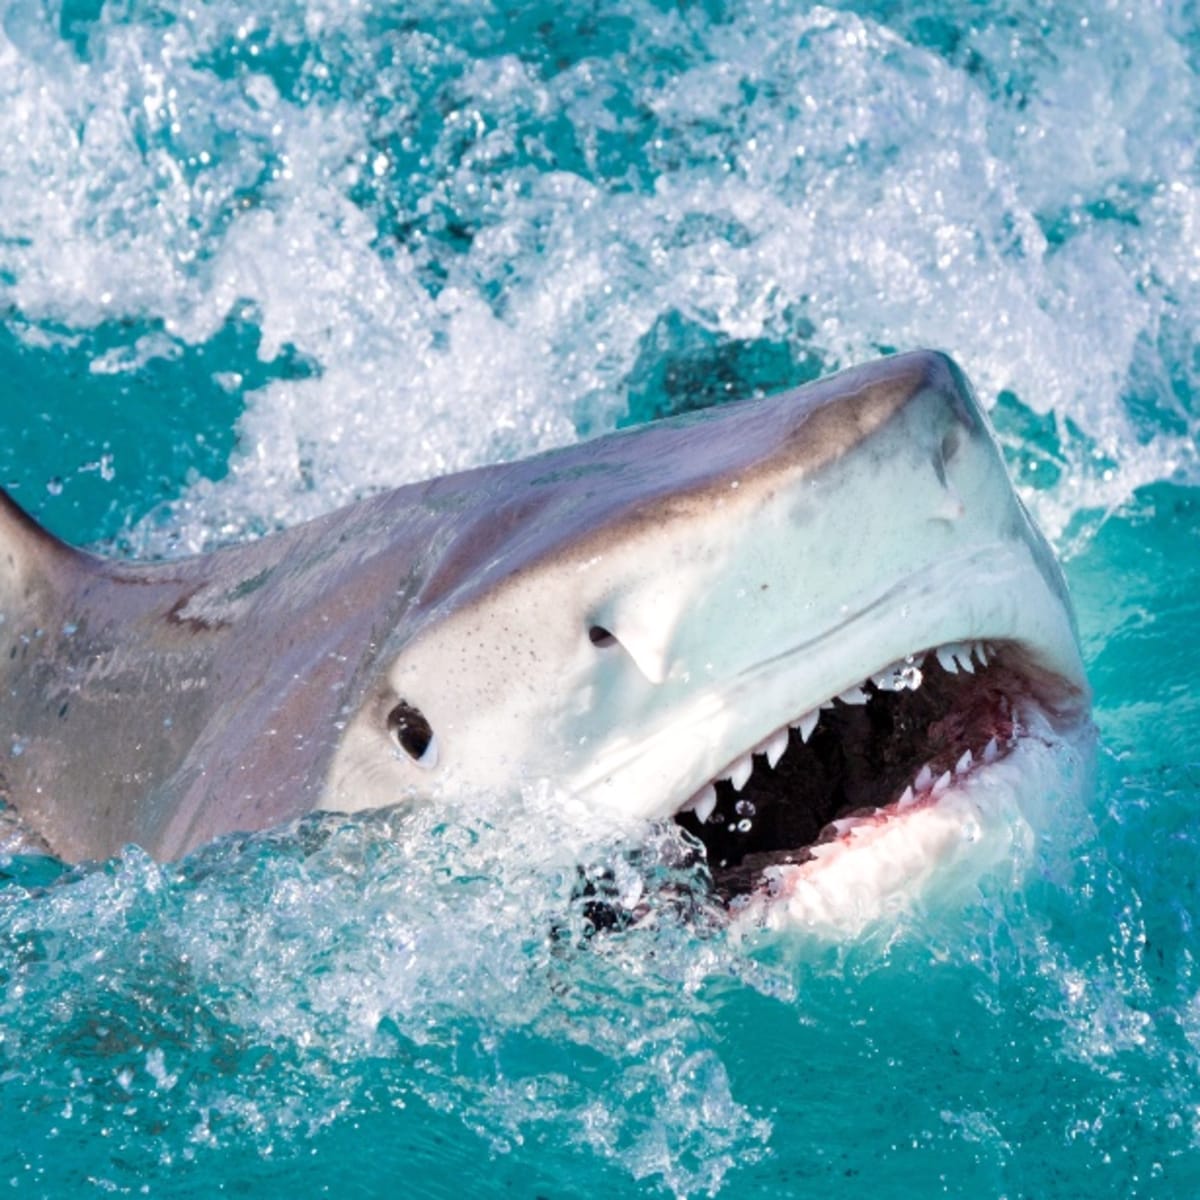 Tiger Shark Attacks Kayak Fisherman on Video Off Hawaii Coast